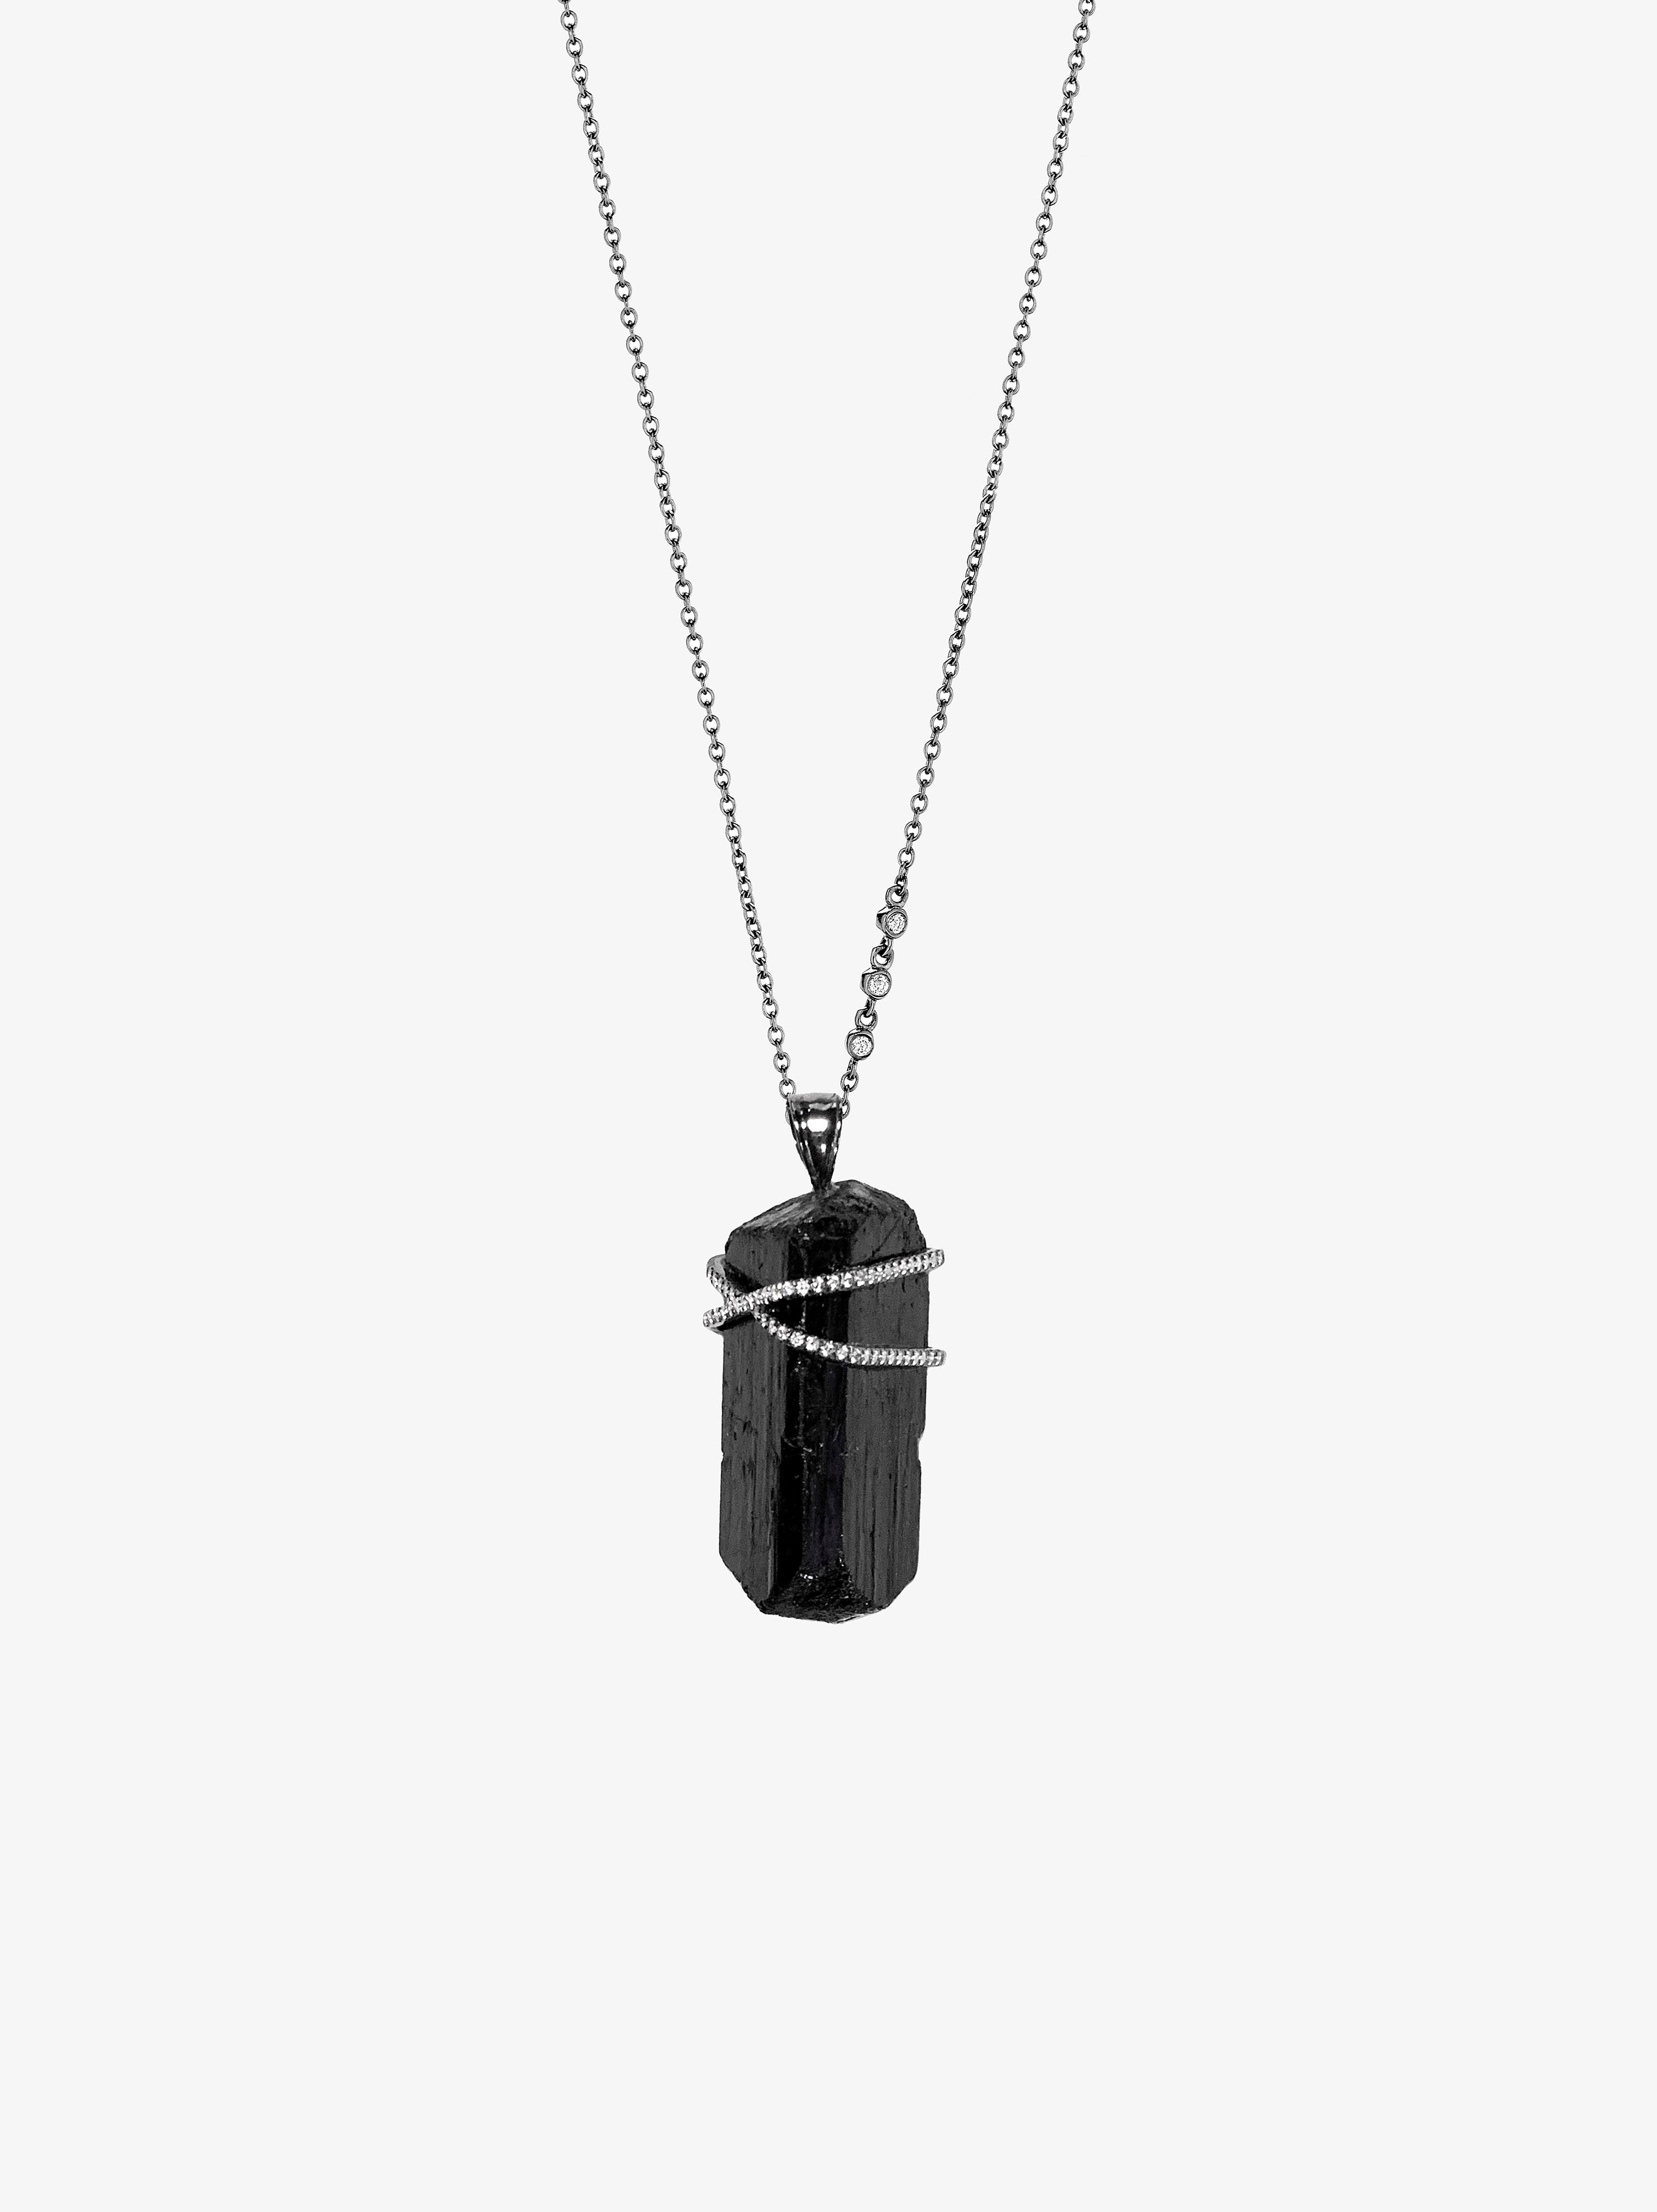 Black Tourmaline Crystalline Necklace